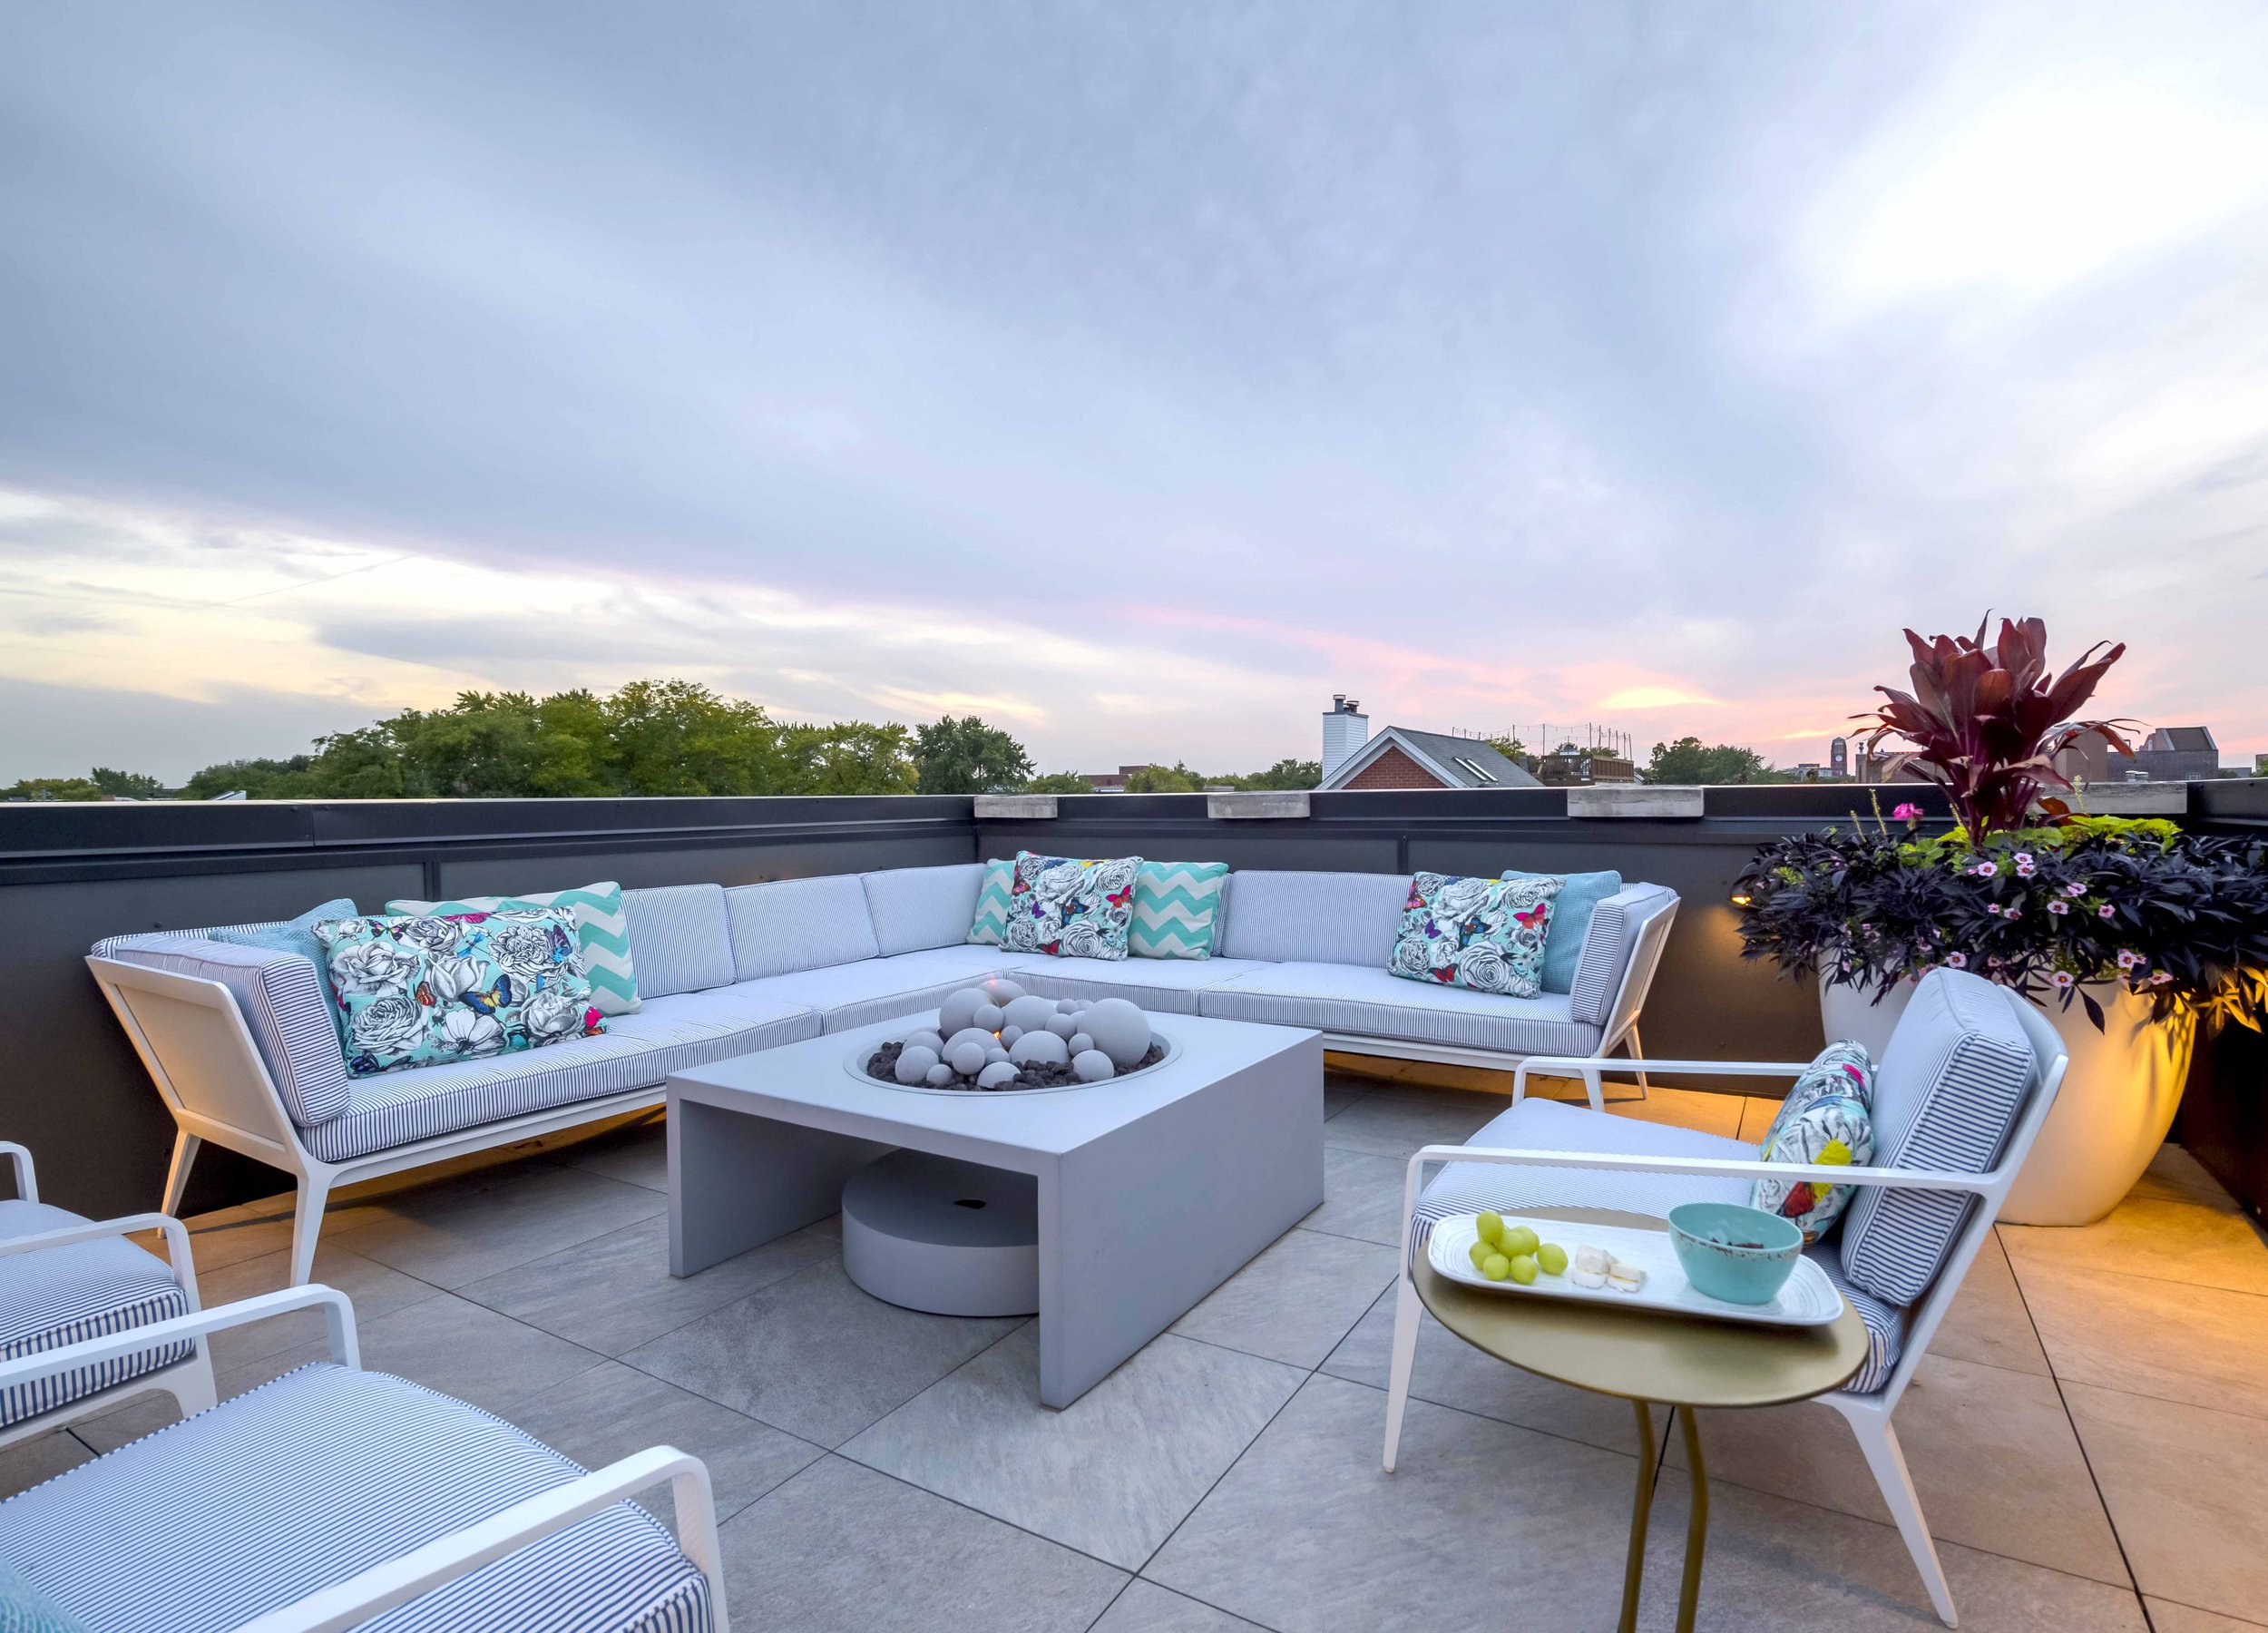 Rooftopia-chicago-lakeview-rooftop-deck-outdoorfurniture-brownjordan-garden.jpg